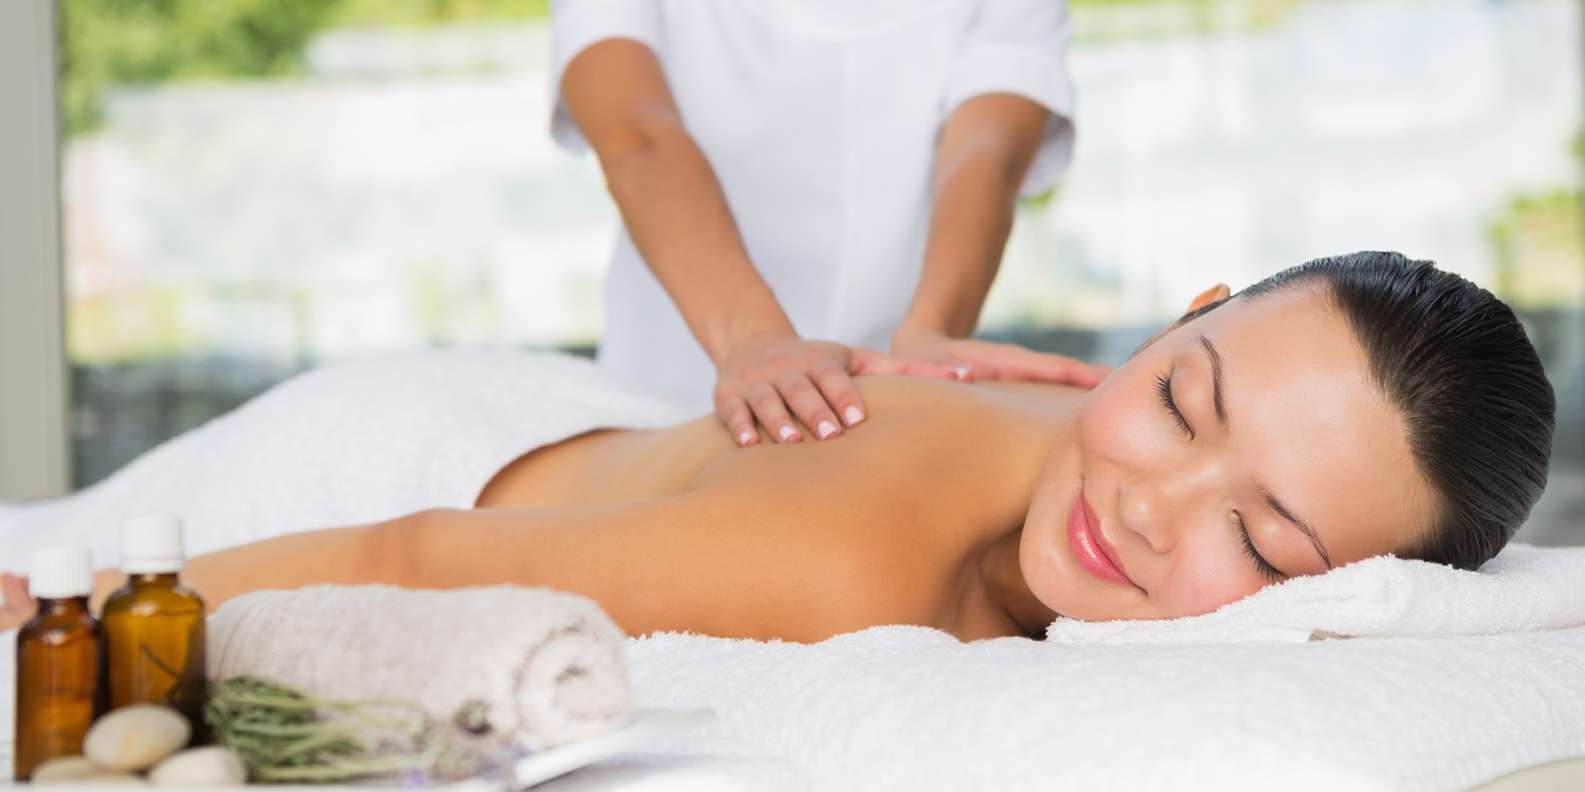 More massage. Кайнарджа спа. 5 Фактов о пользе массажа. Massagedxb. Массаж антистресс расслабляющий антураж.